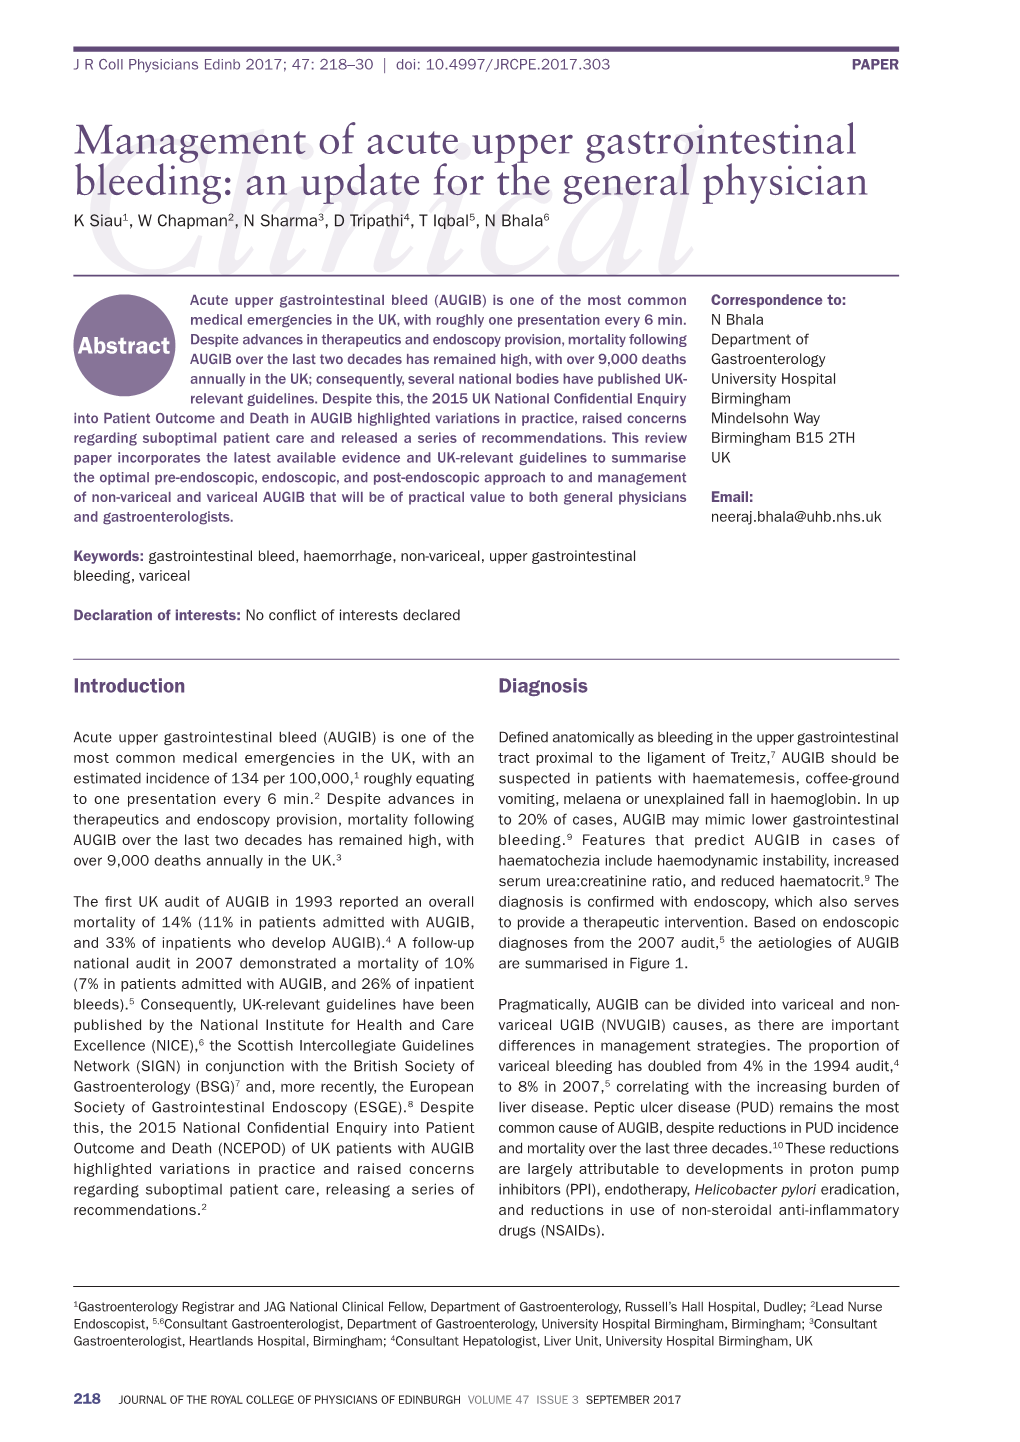 Management of Acute Upper Gastrointestinal Bleeding: an Update for the General Physician K Siau1, W Chapman2, N Sharma3, D Tripathi4, T Iqbal5, N Bhala6